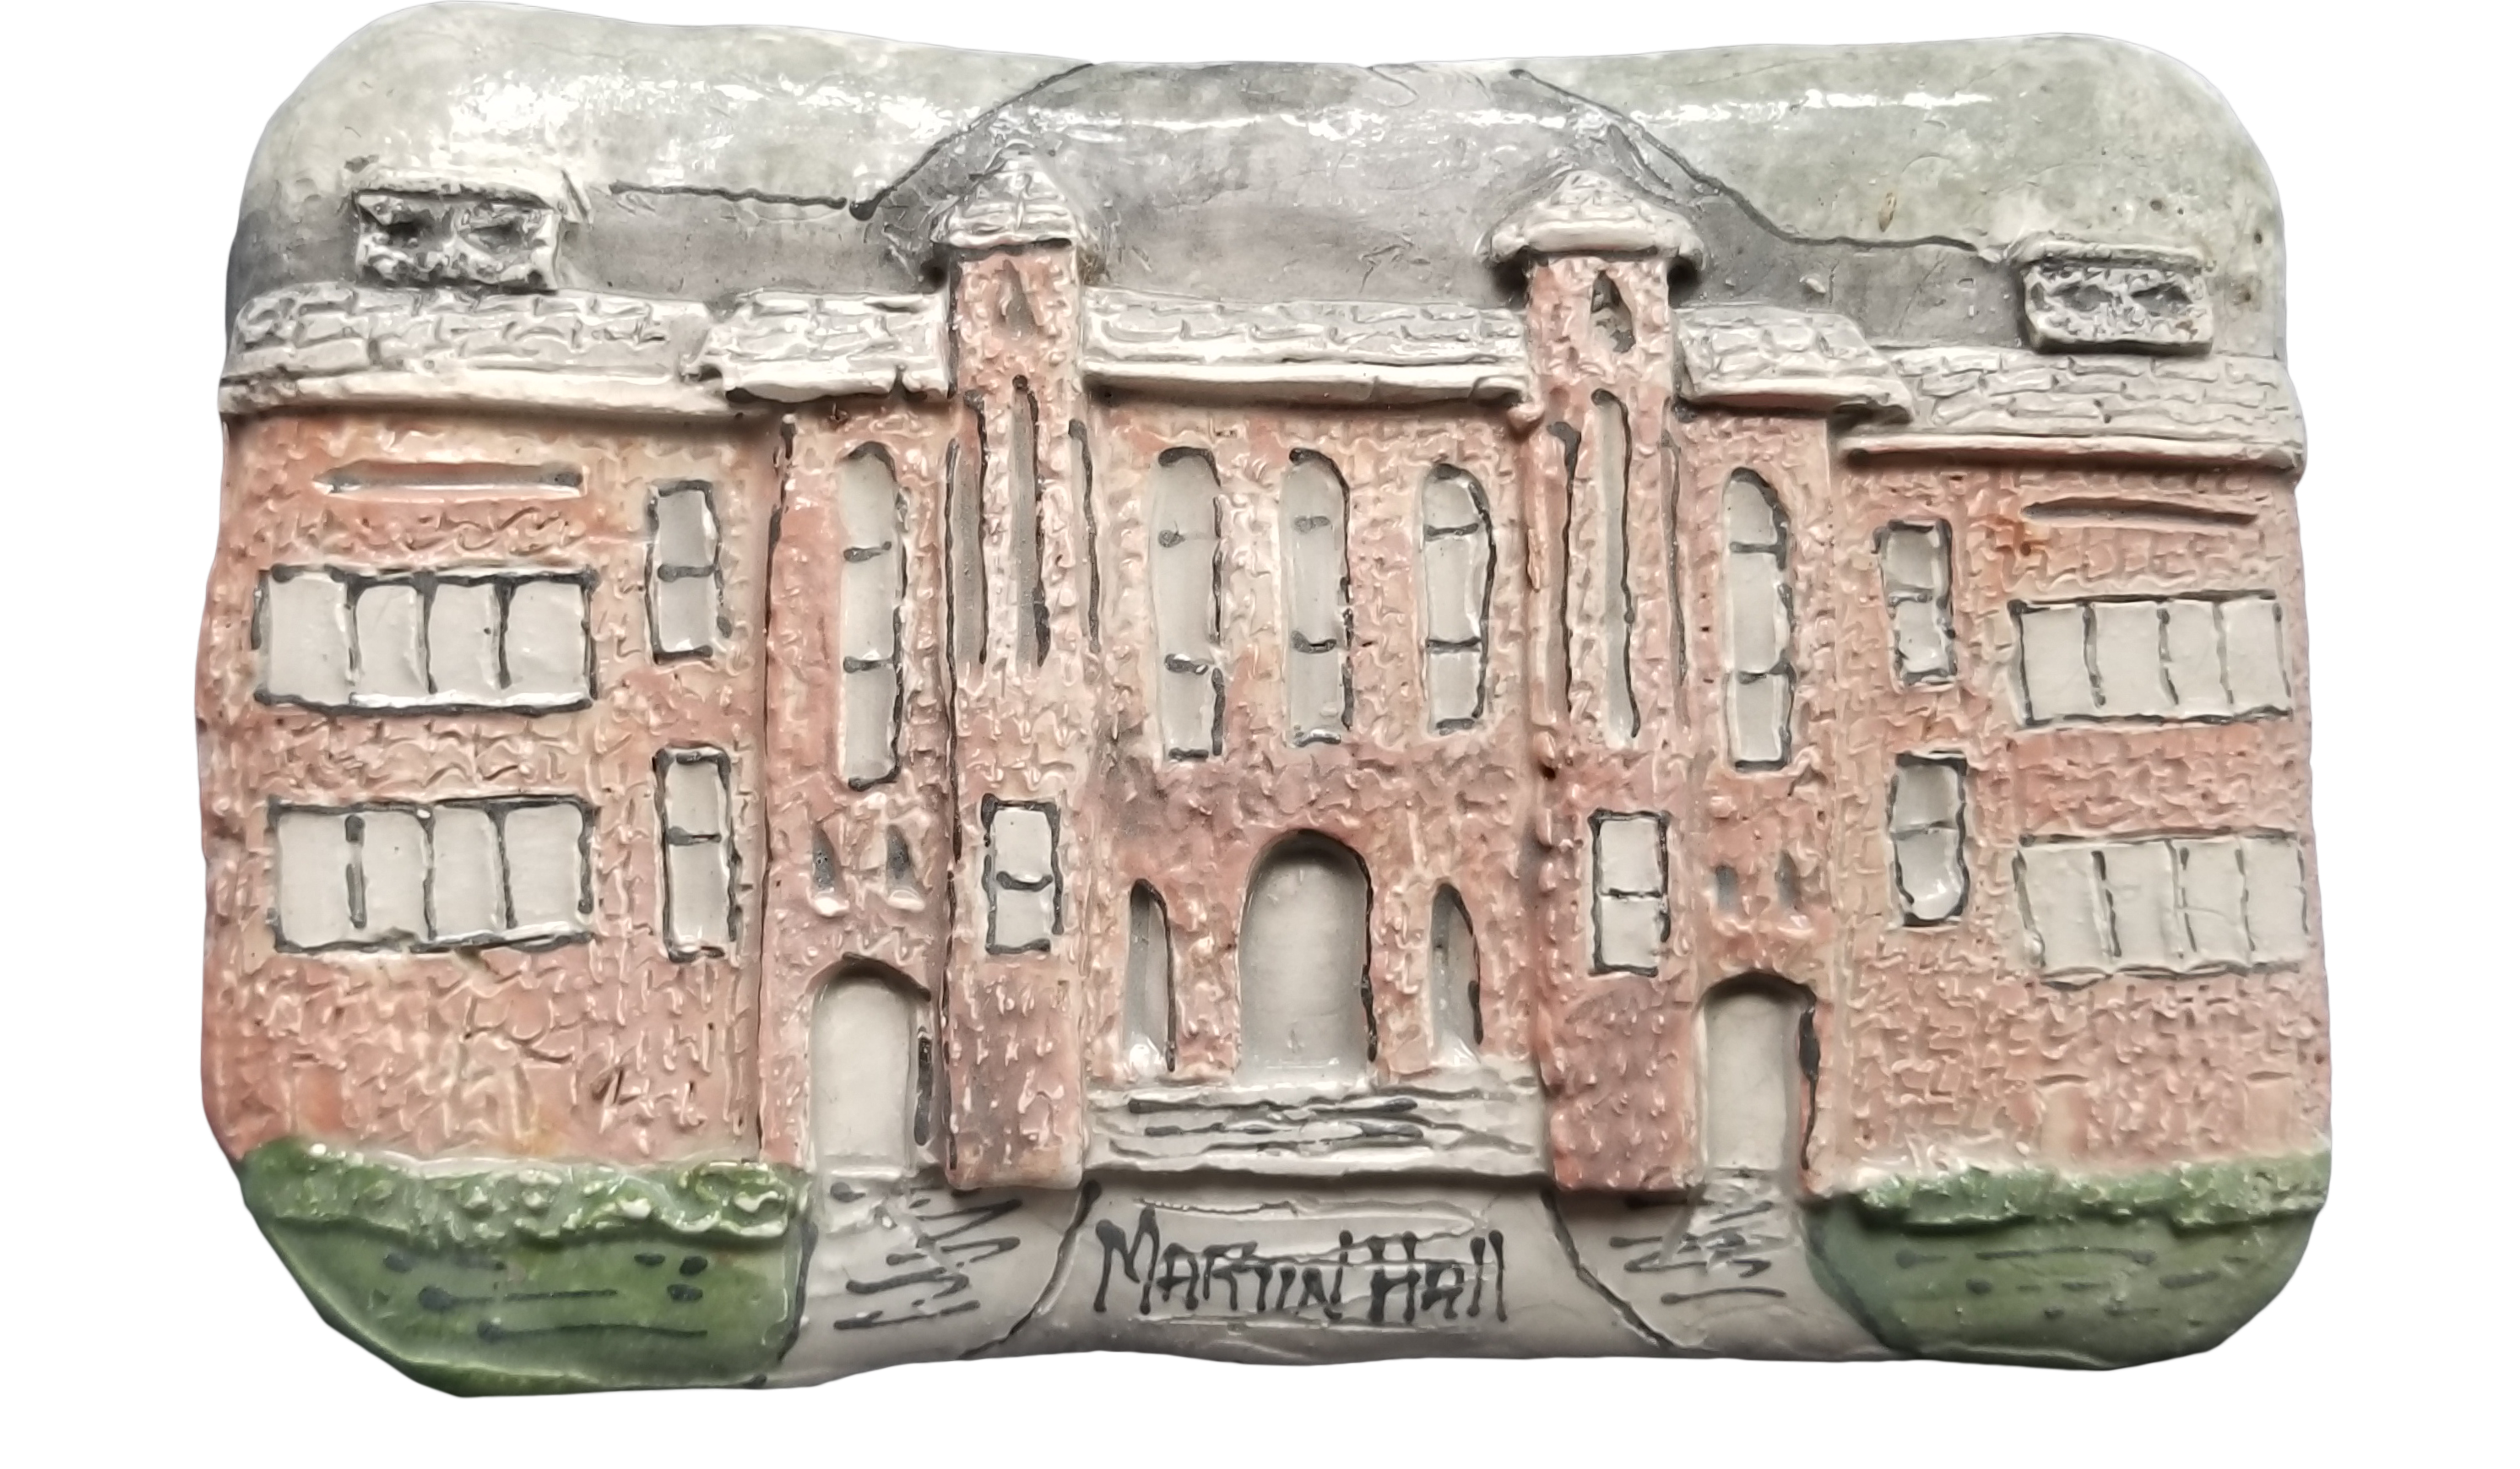 Old Martin Hall